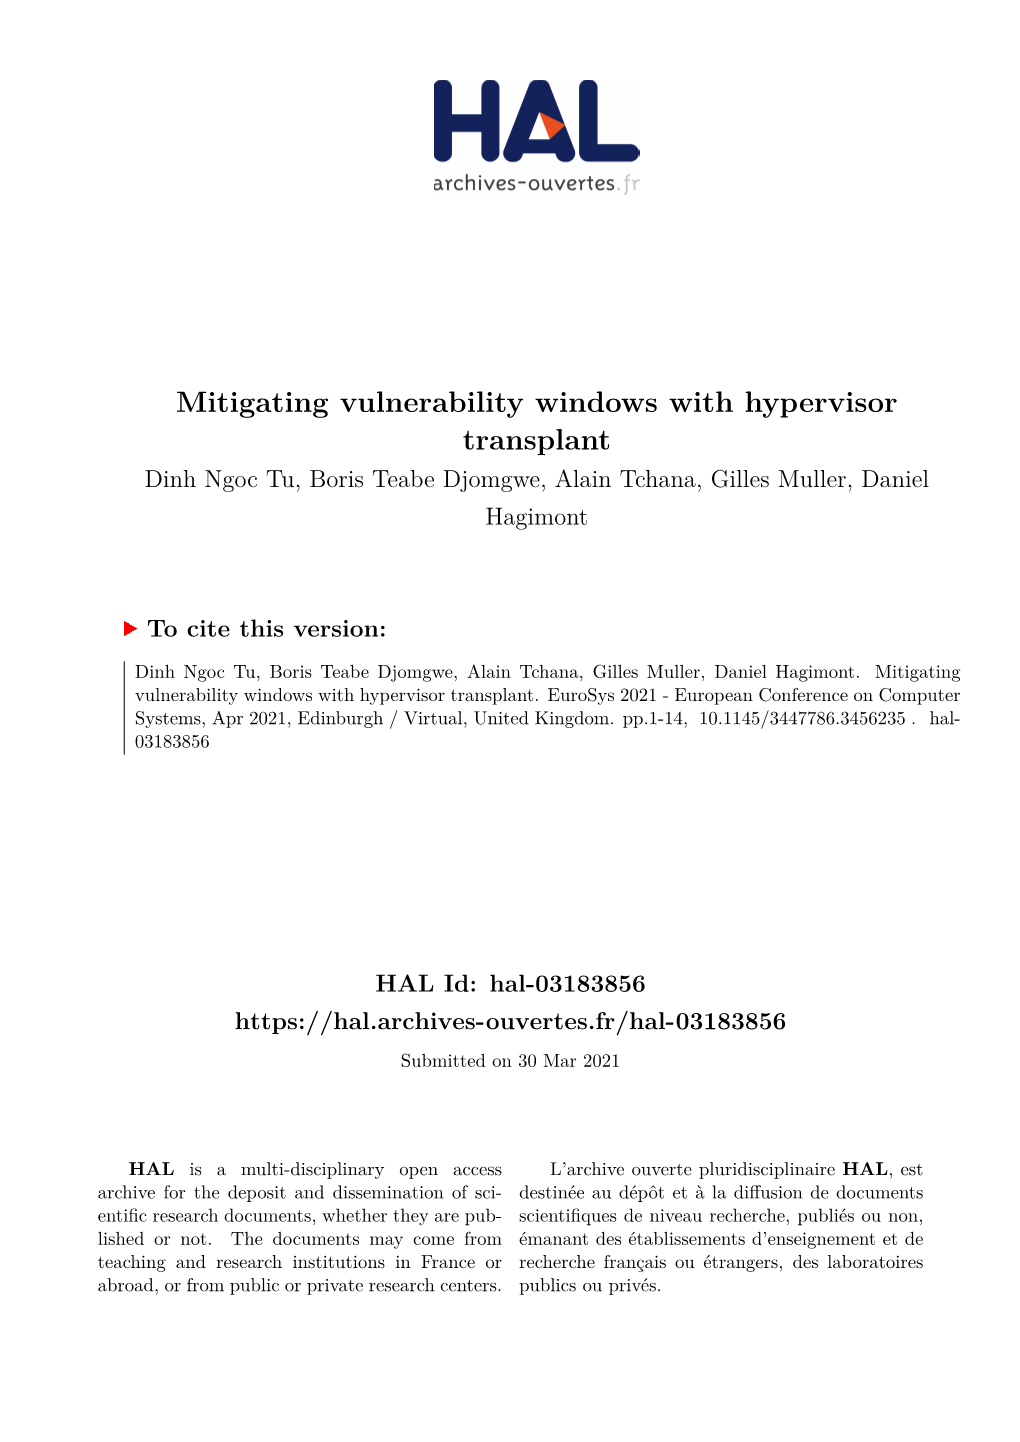 Mitigating Vulnerability Windows with Hypervisor Transplant Dinh Ngoc Tu, Boris Teabe Djomgwe, Alain Tchana, Gilles Muller, Daniel Hagimont